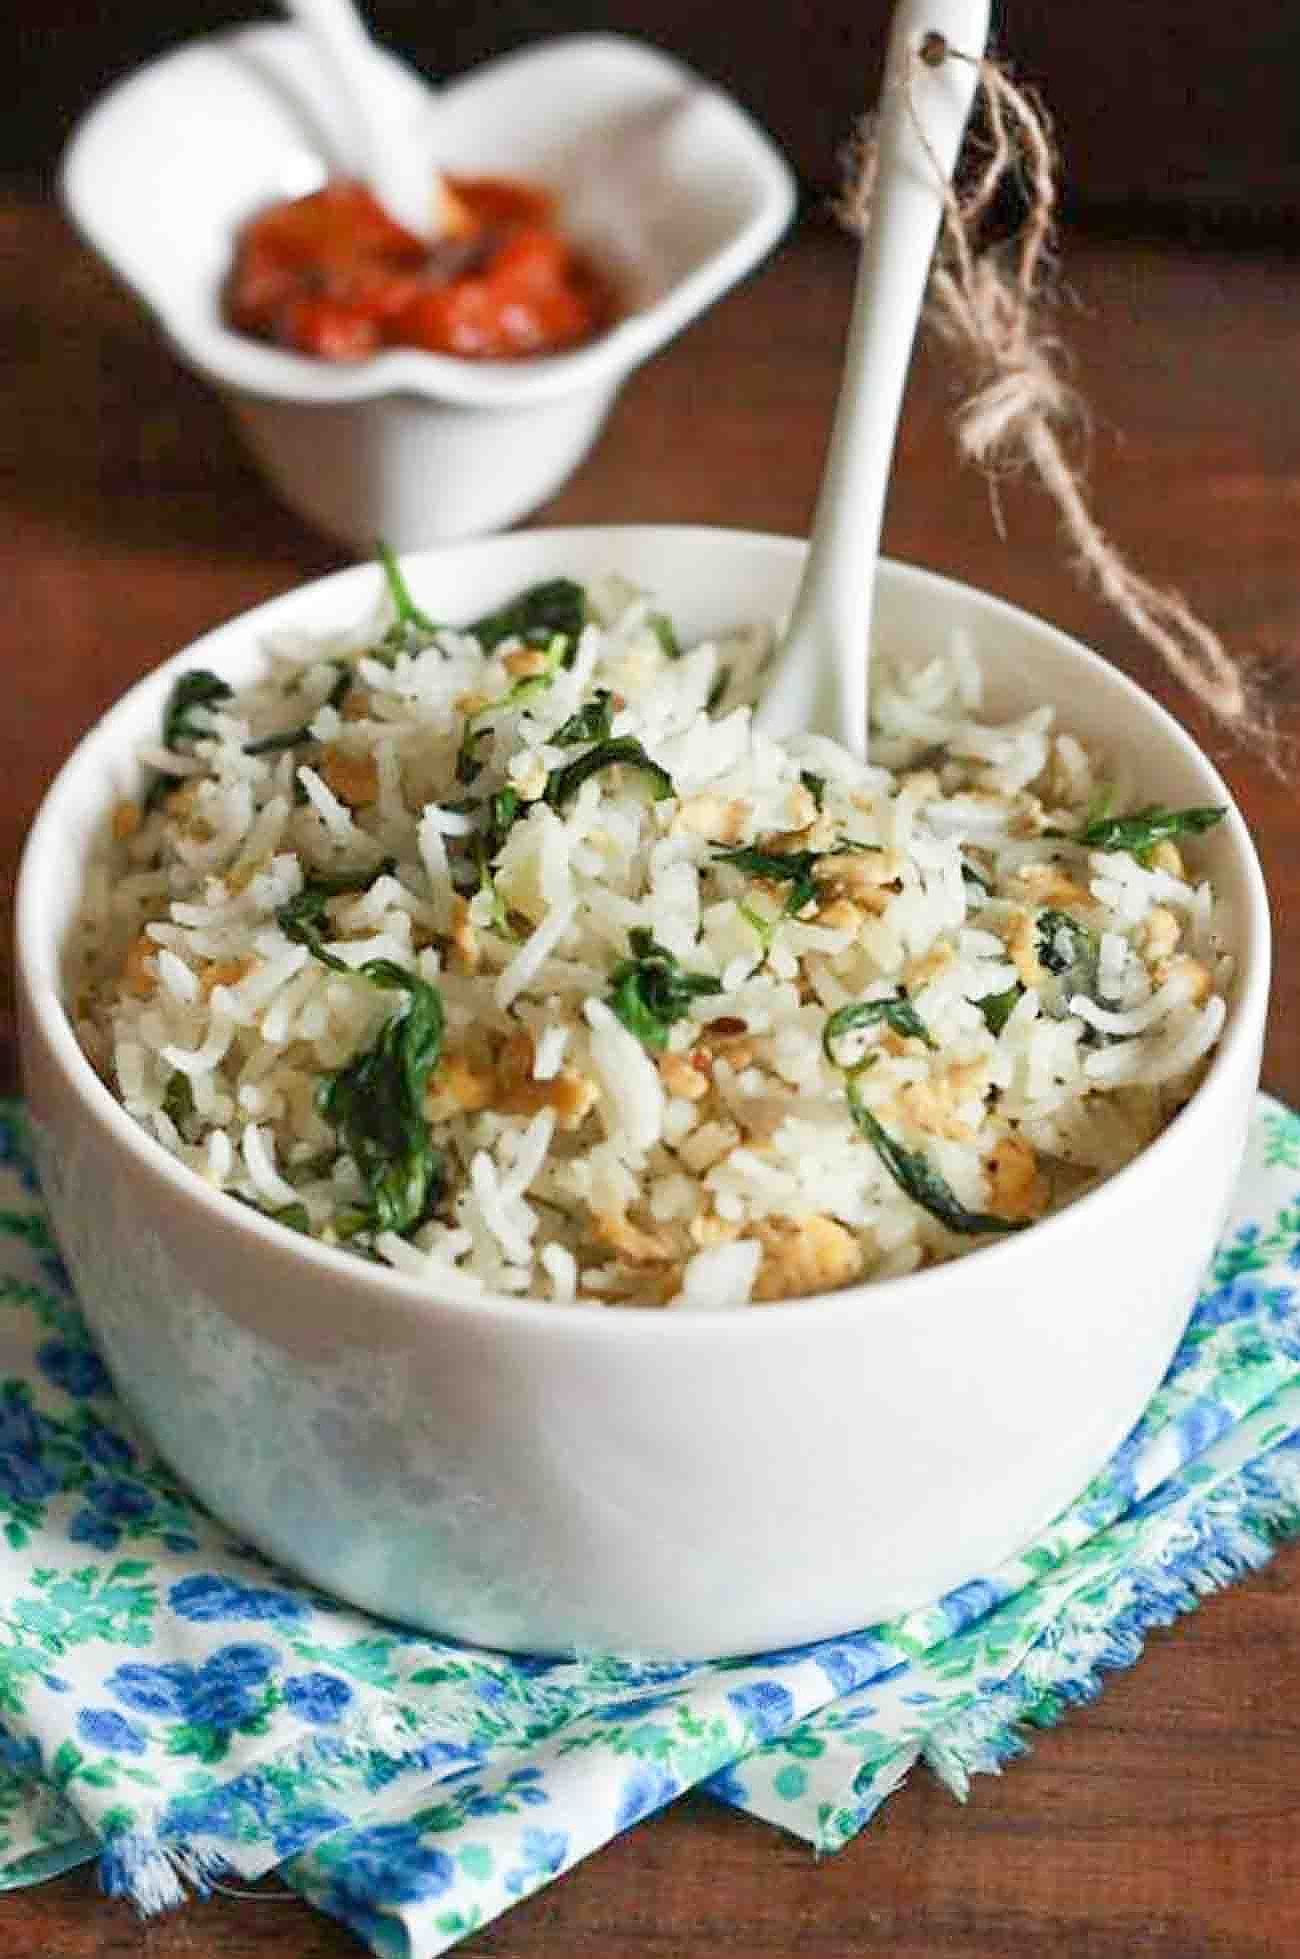 Fenugreek & Egg Fried Rice Recipe (Anda Methi Chawal)